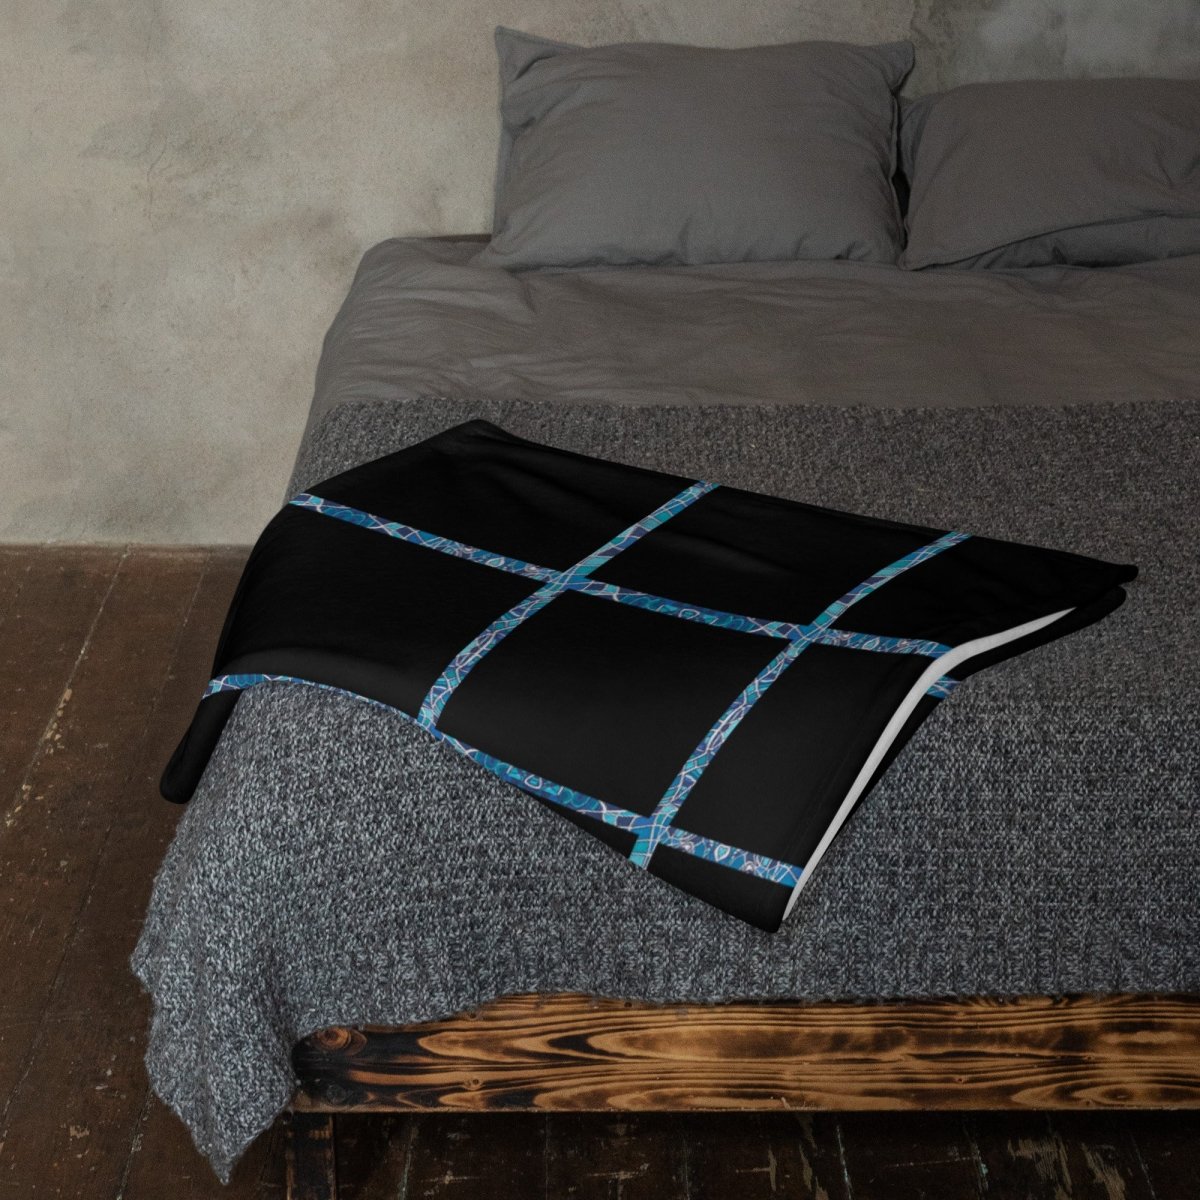 Decke • dezente Linien – blau, schwarz - Wonderwazek